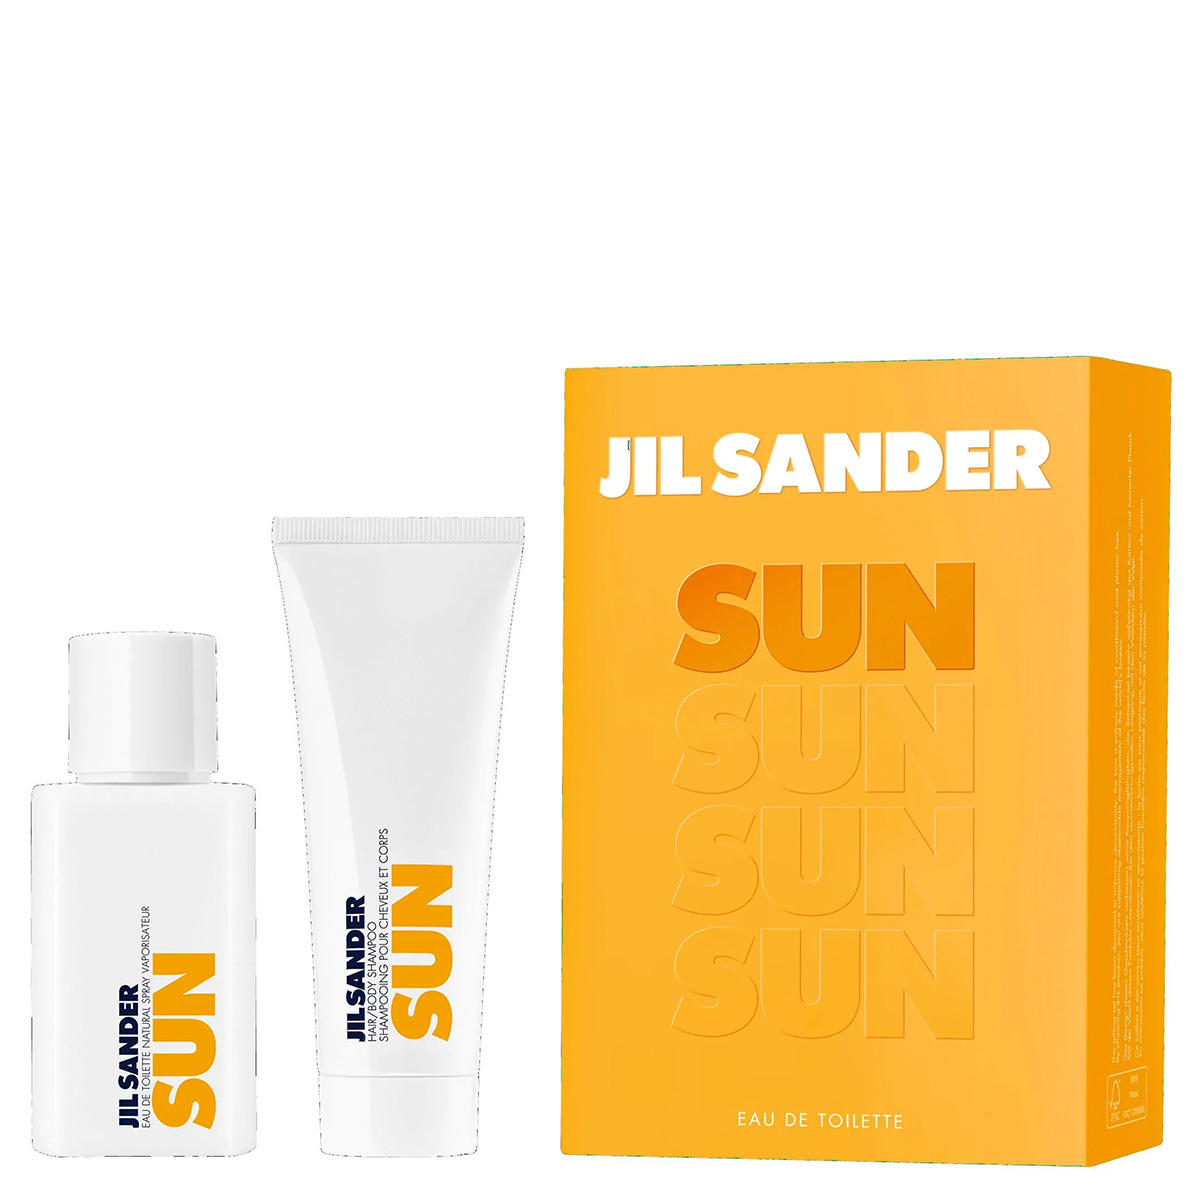 JIL SANDER SUN Gift set  - 1